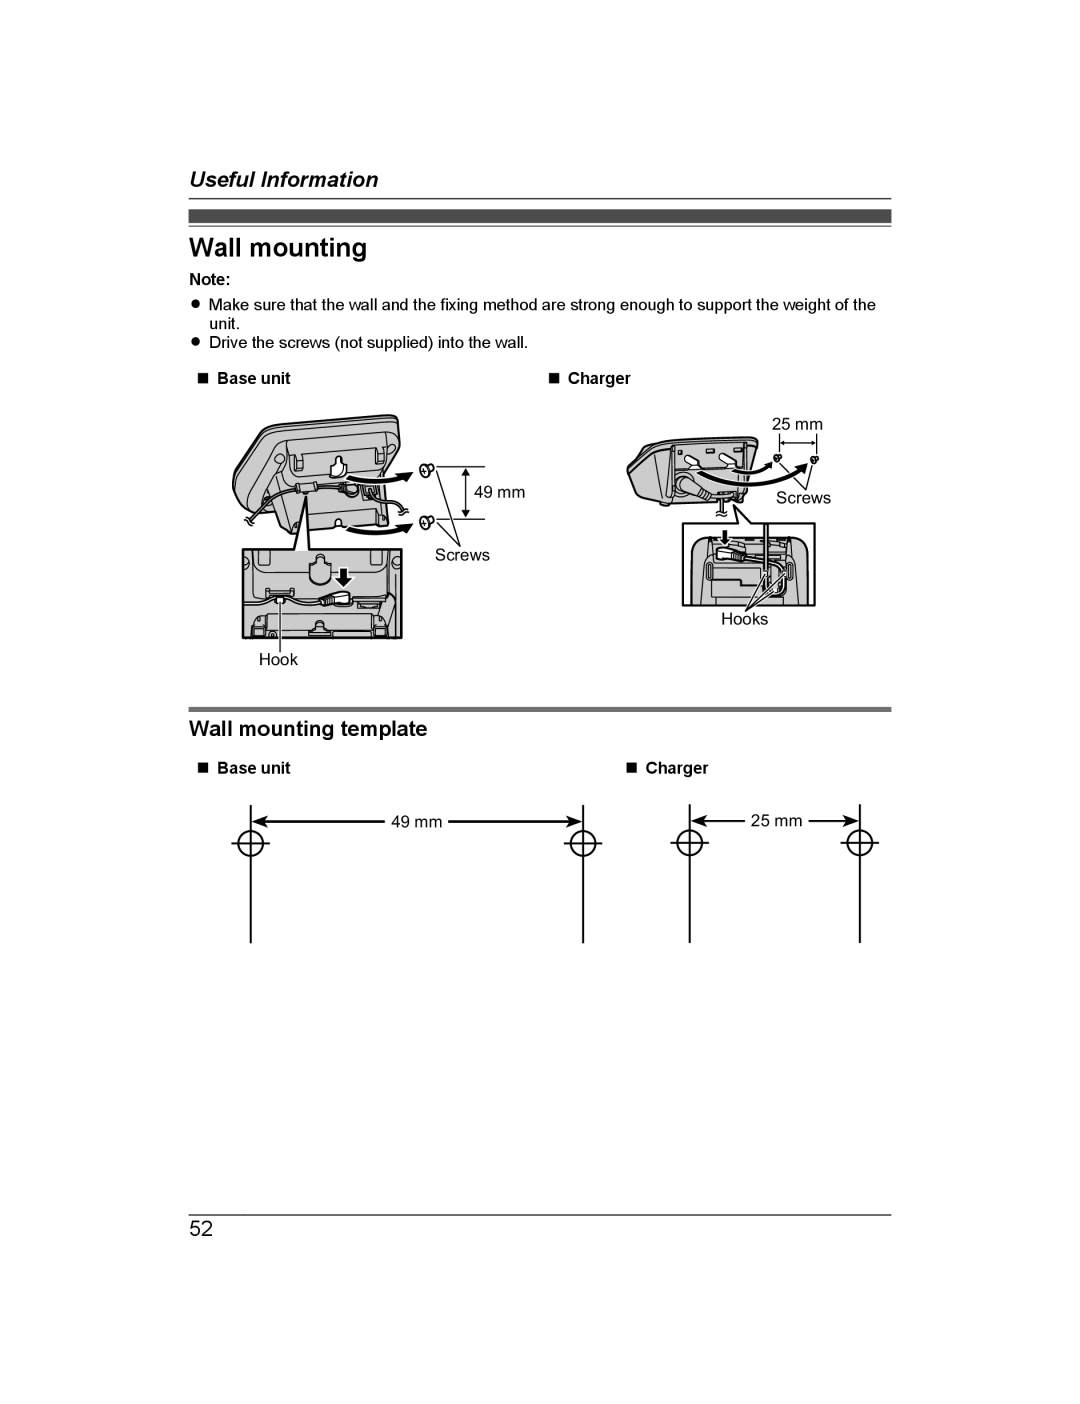 Panasonic KX-TG8163AL, KX-TG8162AL operating instructions Wall mounting template, Useful Information, n Charger 